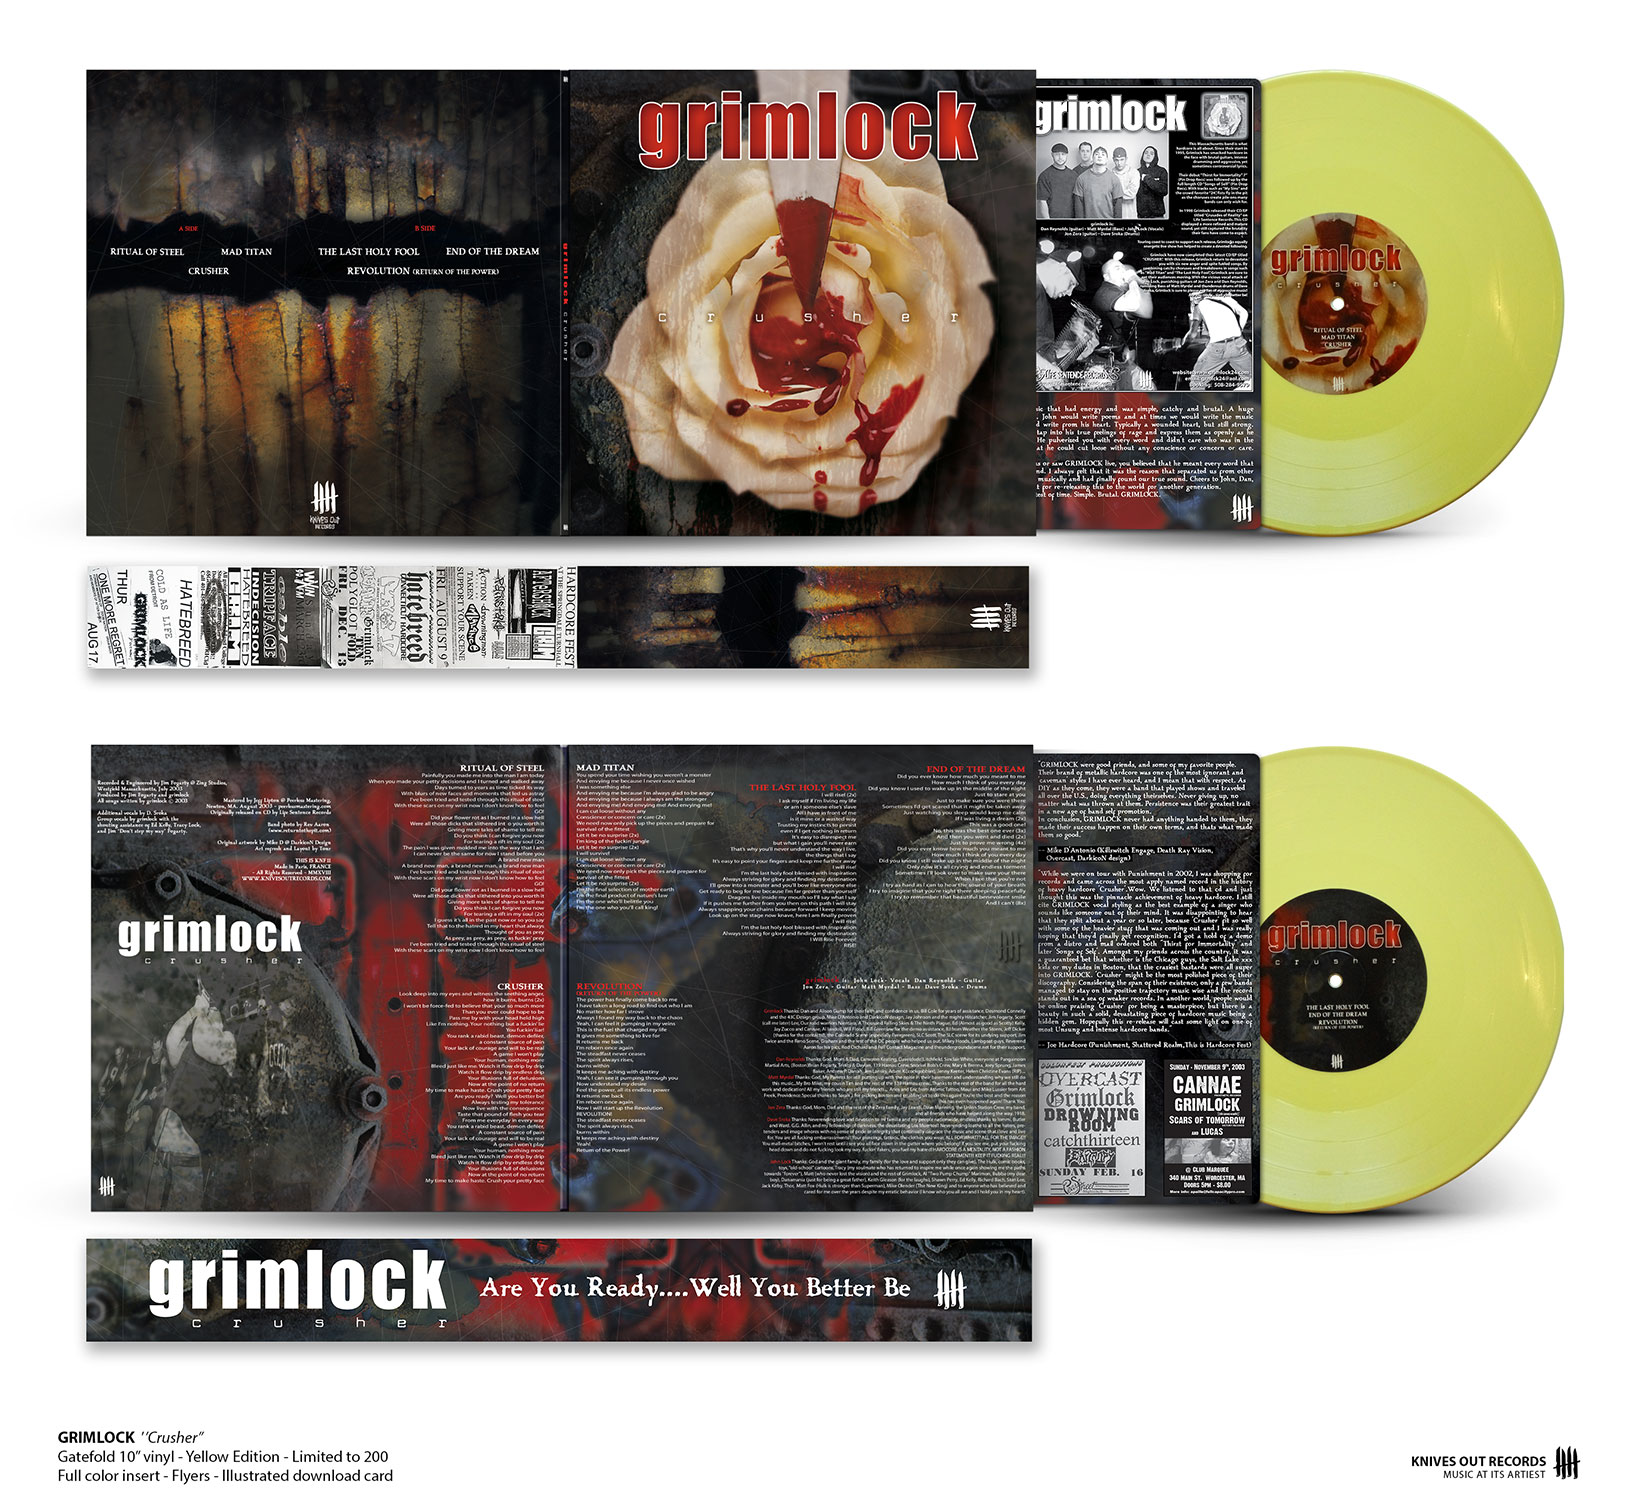 GRIMLOCK Crusher - gatefold 10" vinyl , pale yellow - "Steel Edition"